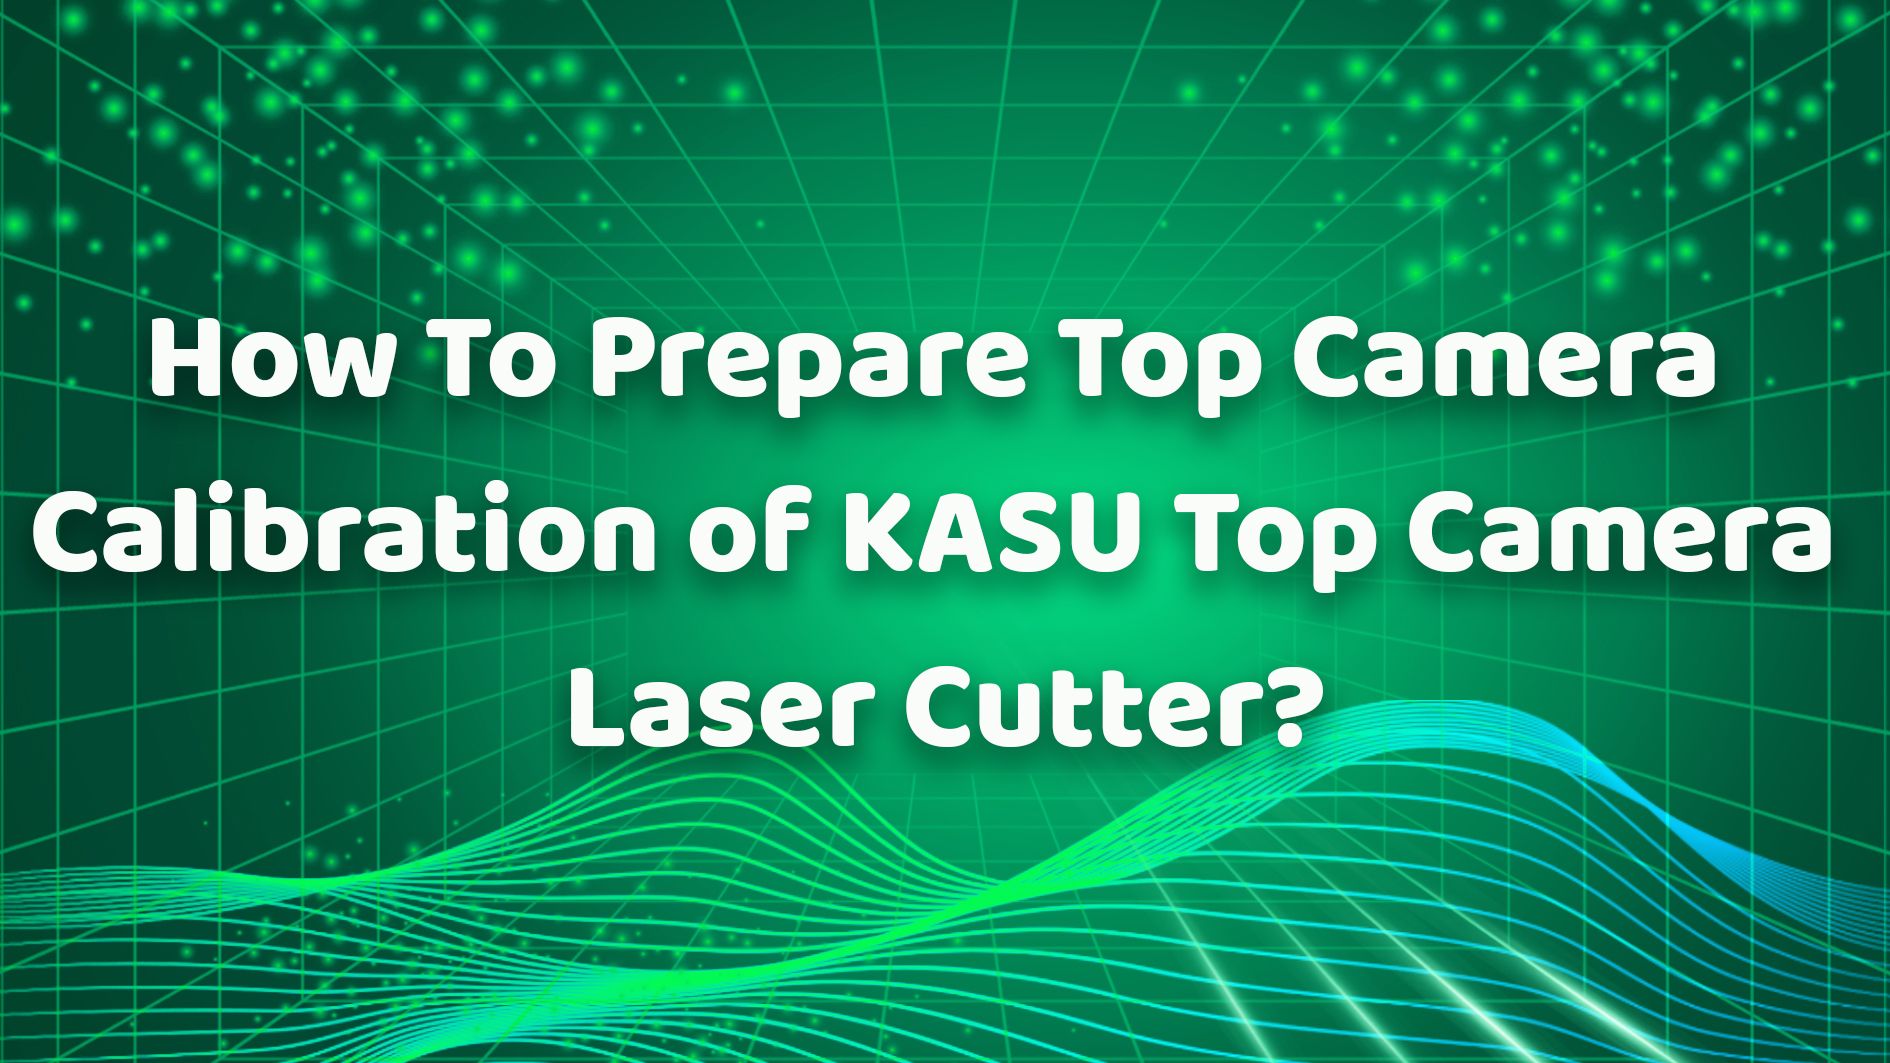 How To Prepare Top Camera Calibration of KASU Top Camera Laser Cutter?